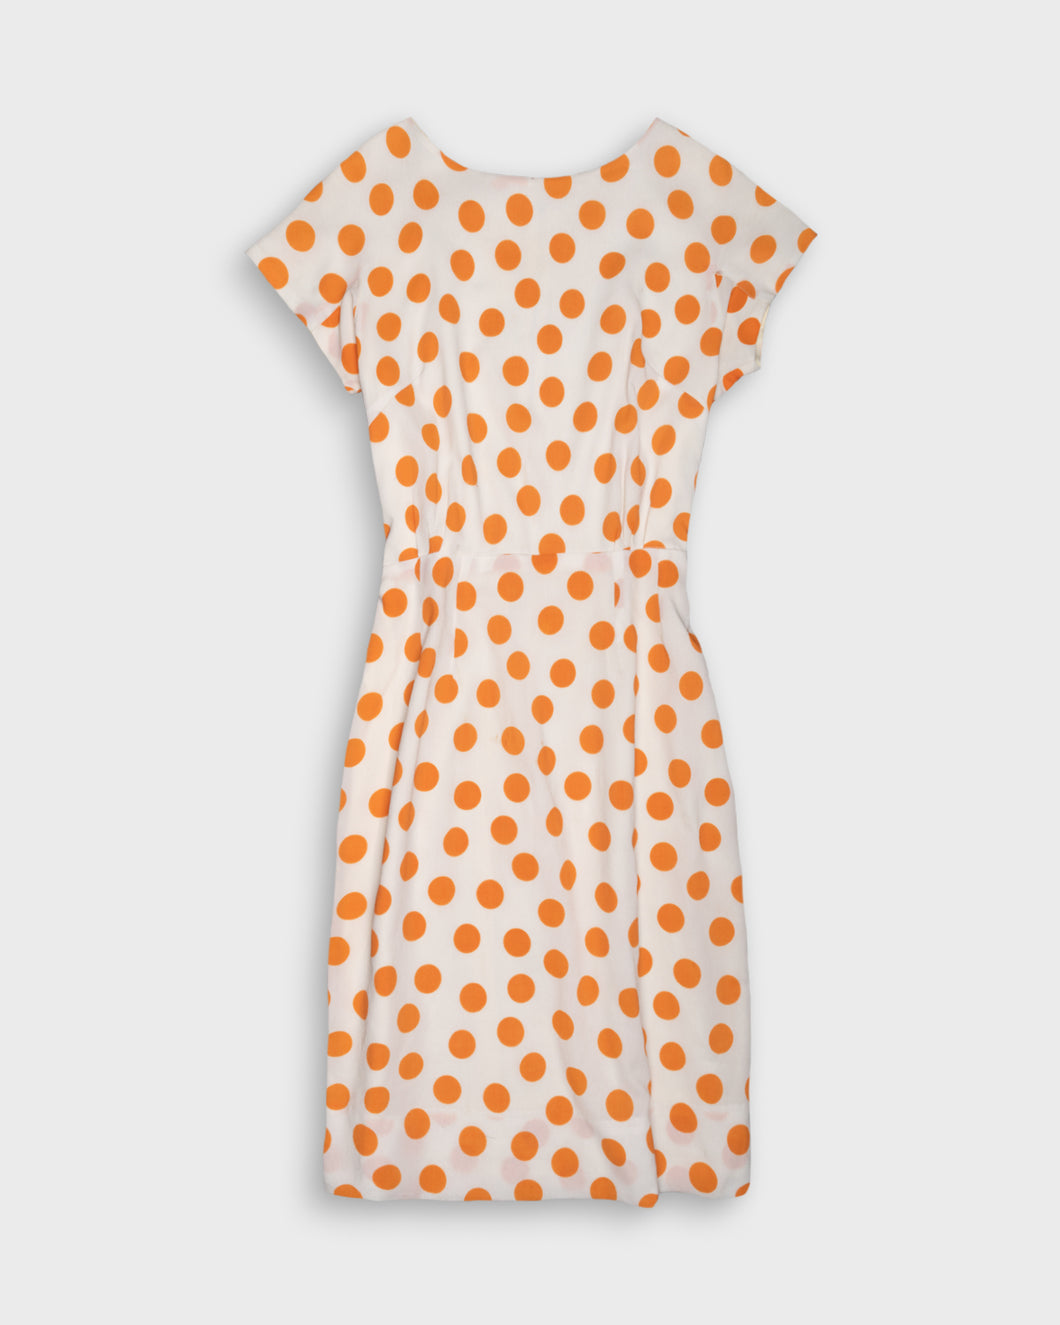 Off white dress with orange polka dot print